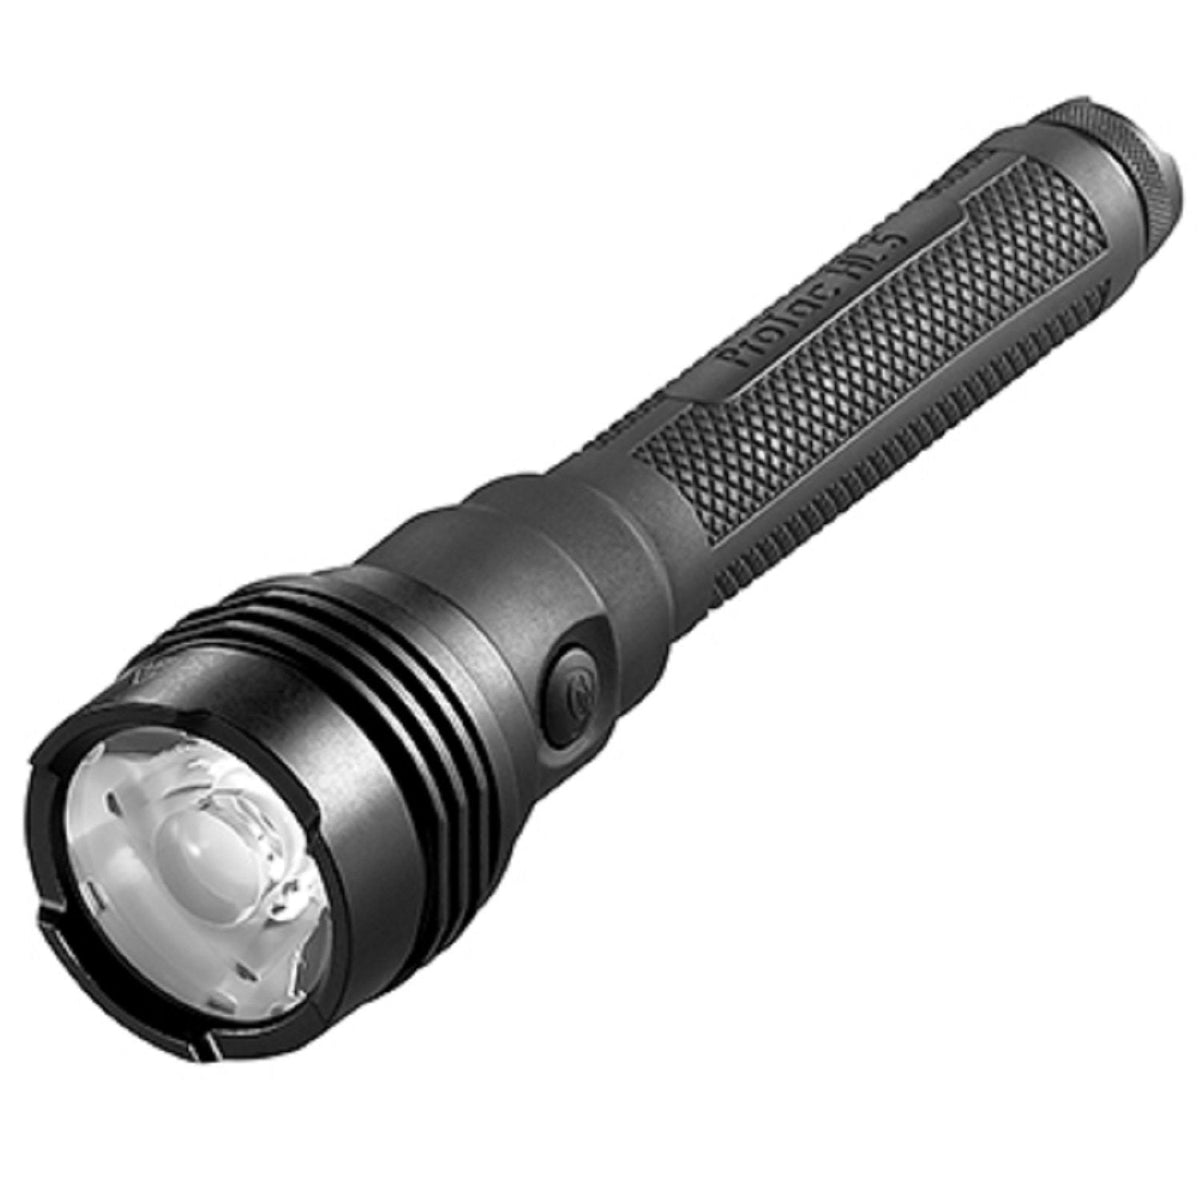 Streamlight ProTac HL-5X USB Rechargeable 3500-Lumens Tactical Flashlight Flashlights and Lighting Streamlight Tactical Gear Supplier Tactical Distributors Australia